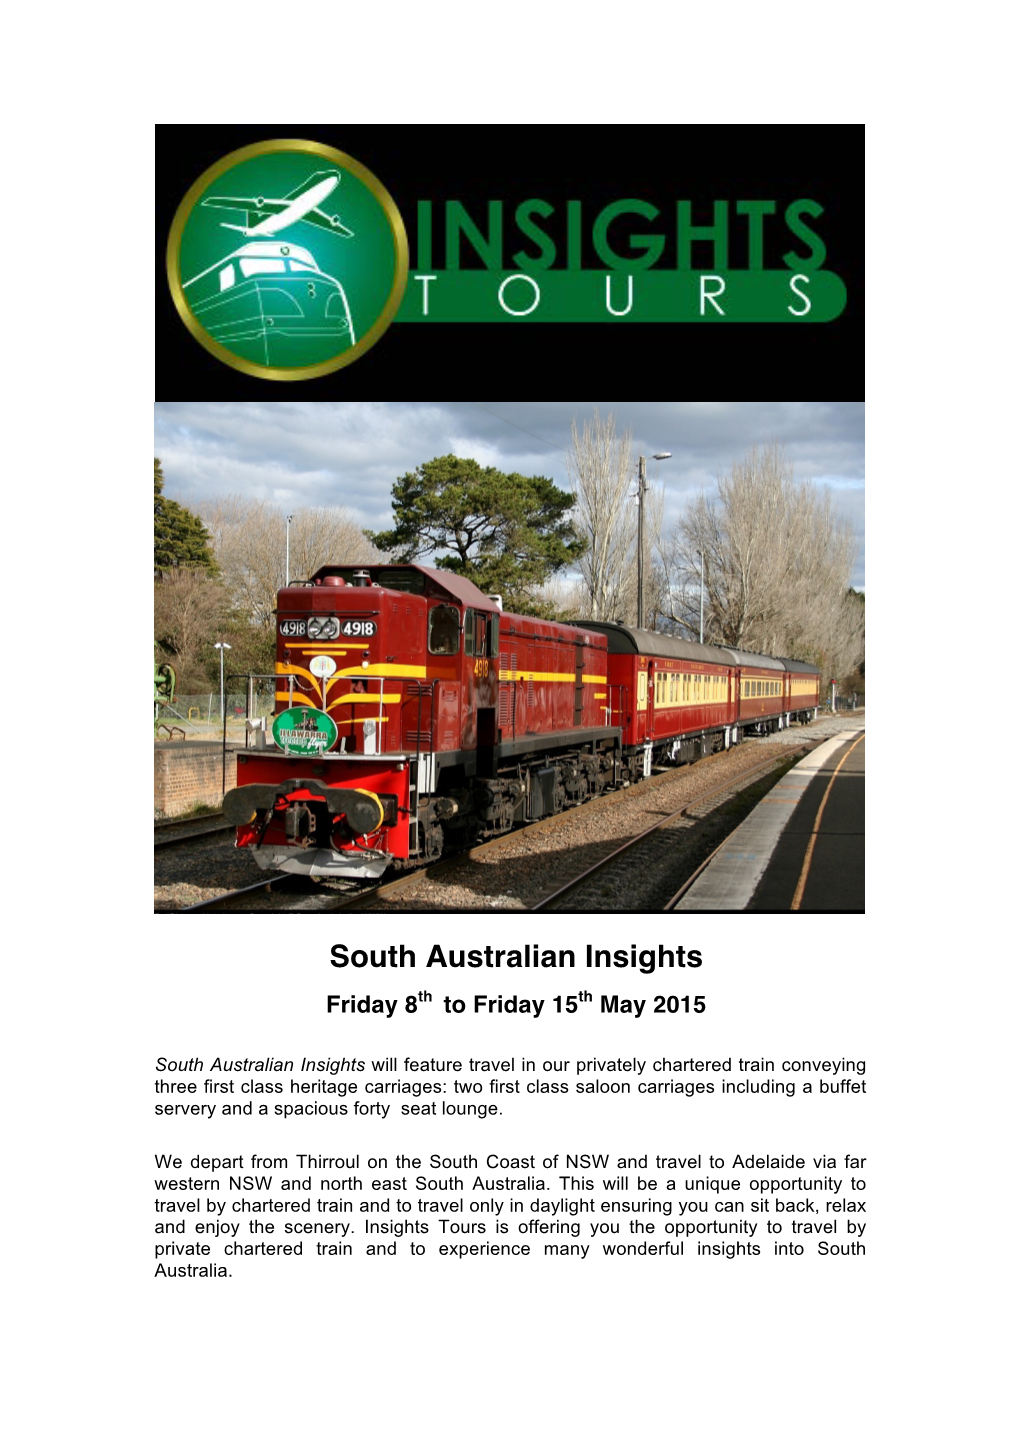 South Australian Insights Itinerary